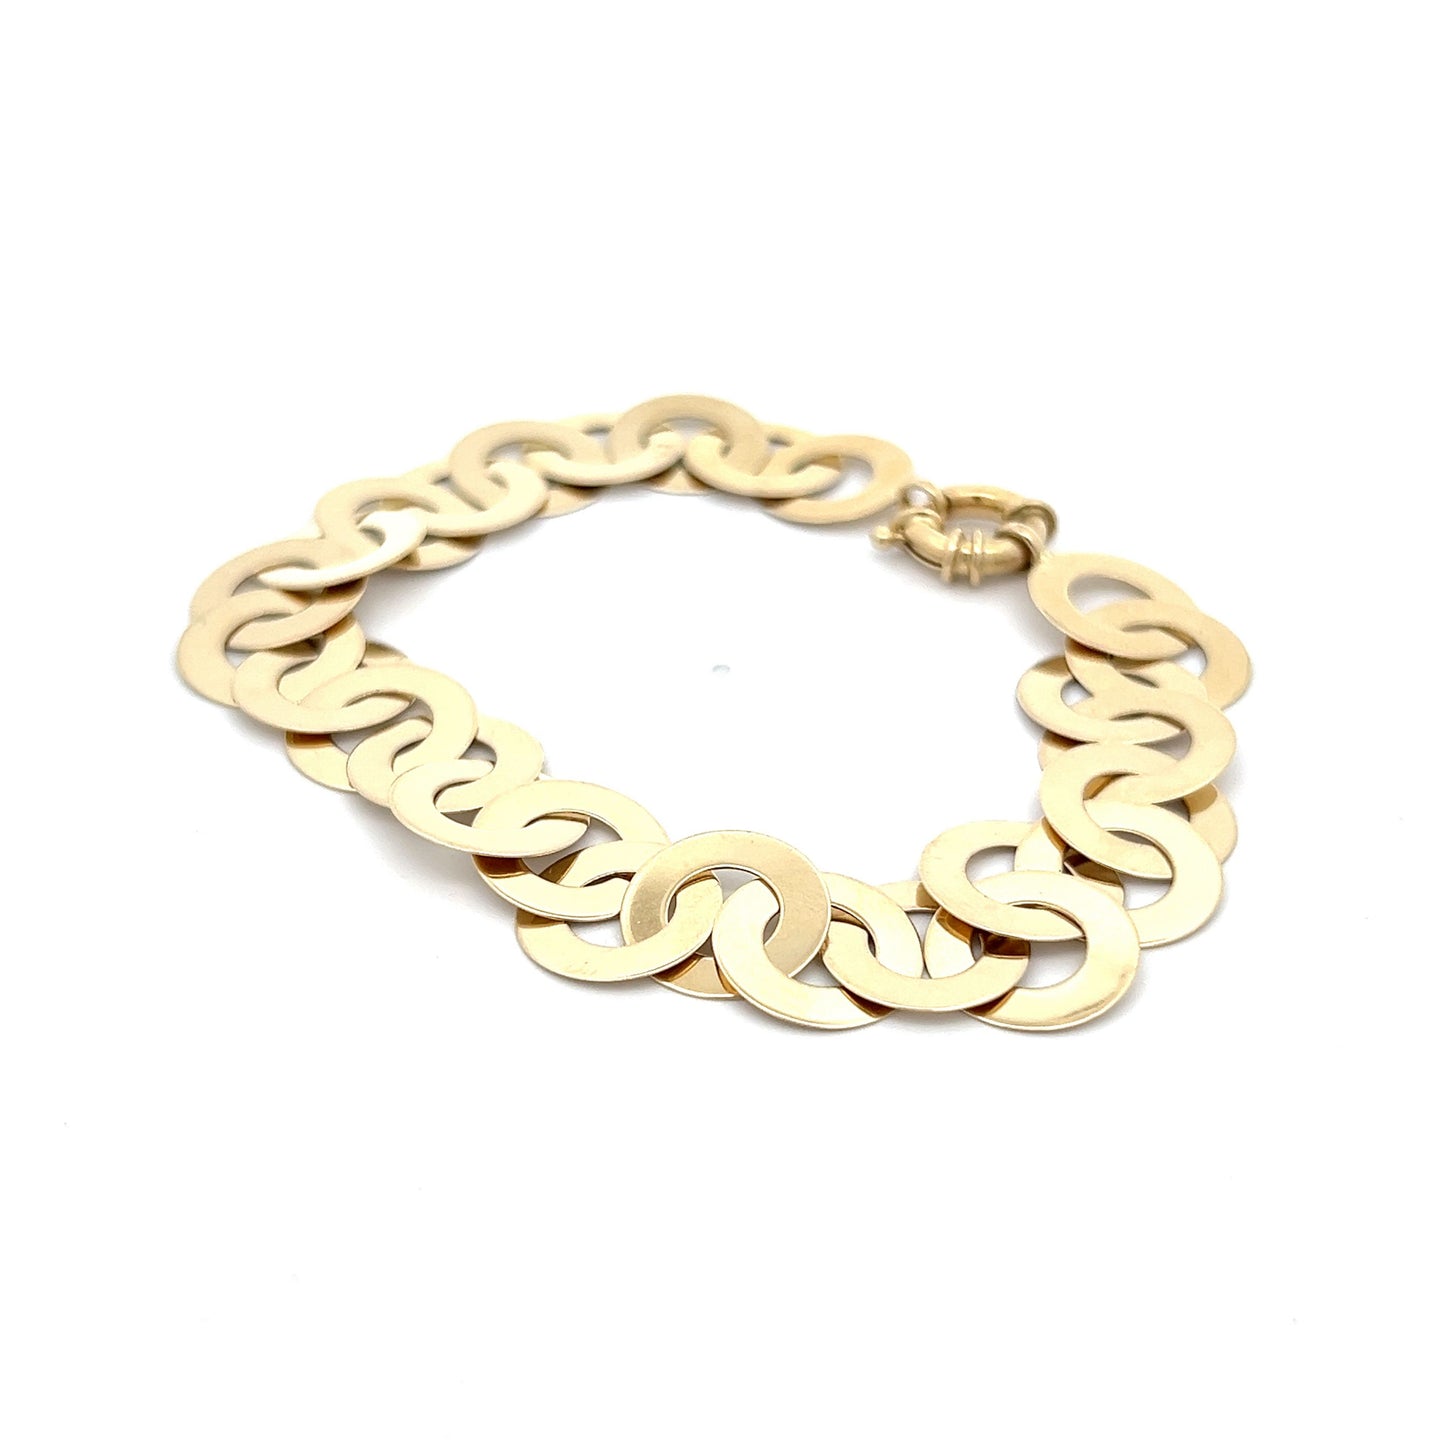 Interlocking Disc Bracelet in 14k Yellow Gold